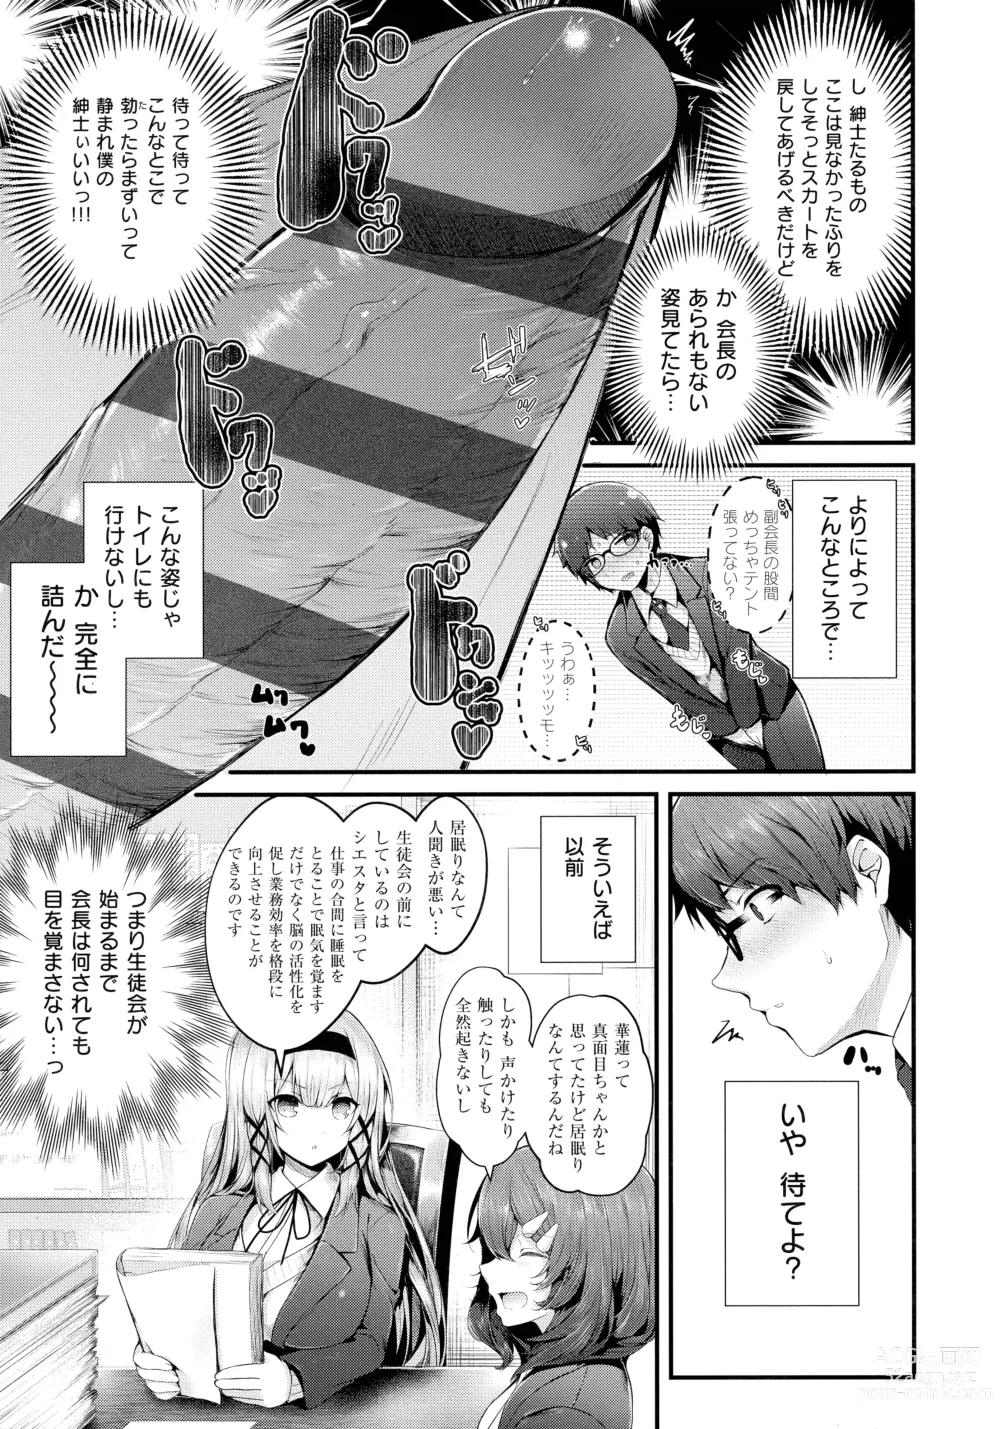 Page 11 of manga Namaiki Love Hole + Melonbooks Kounyu Tokuten + Toranoana Kounyu Tokuten